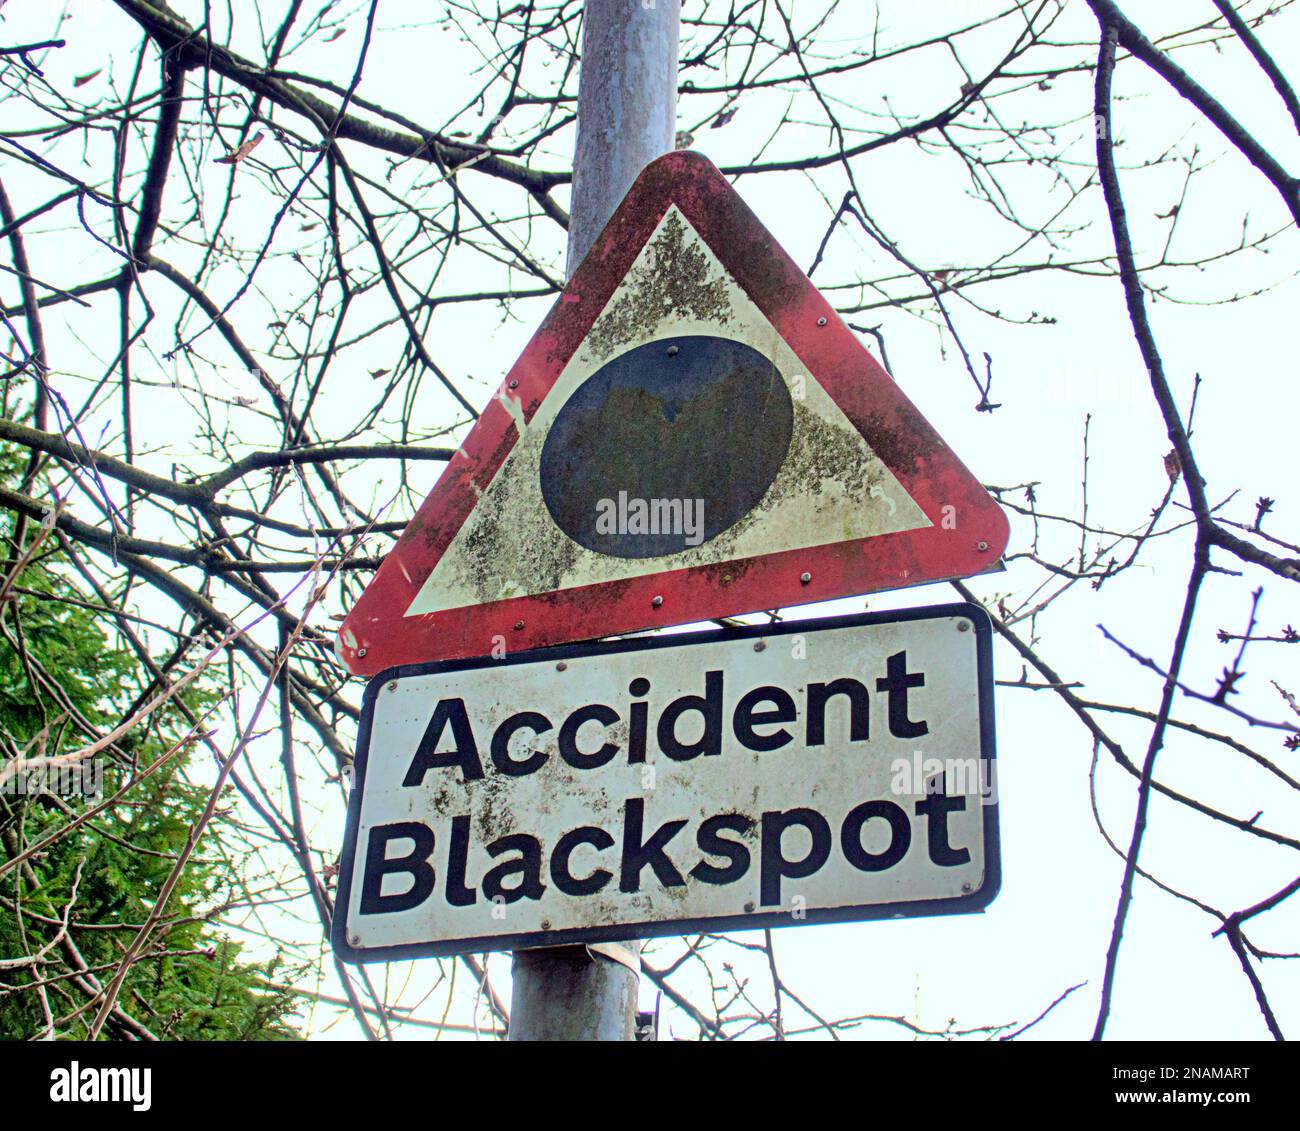 accident blackspot road sign  Credit Gerard Ferry/Alamy Stock Photo